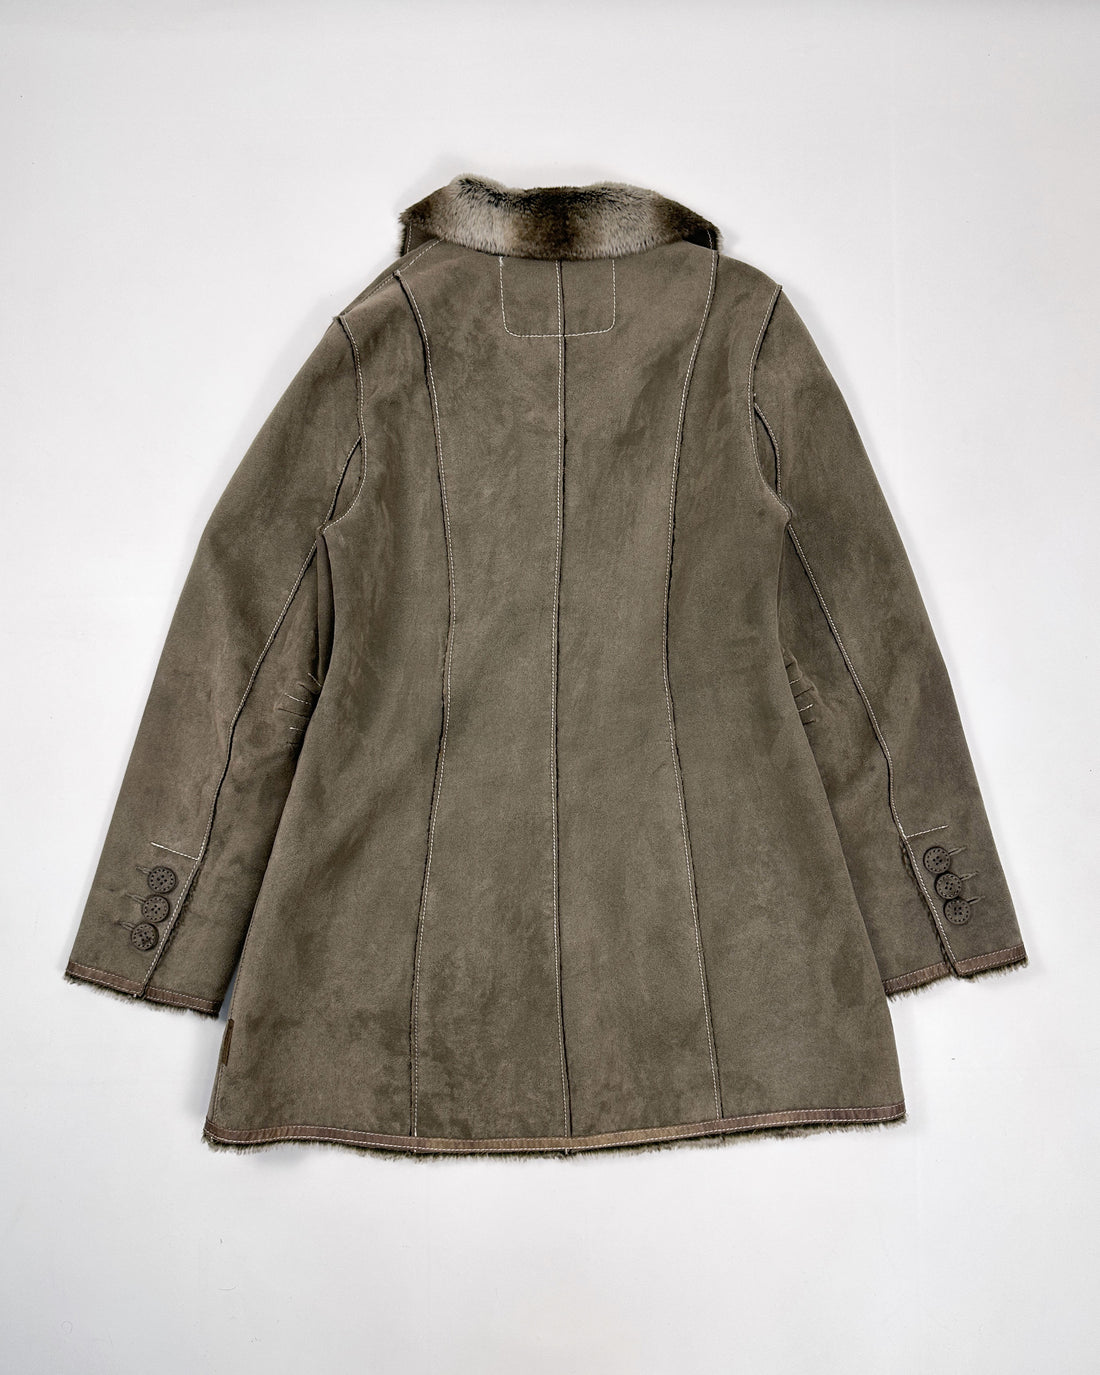 Armani Stitched Stuffed Brown Fur Coat 1990's